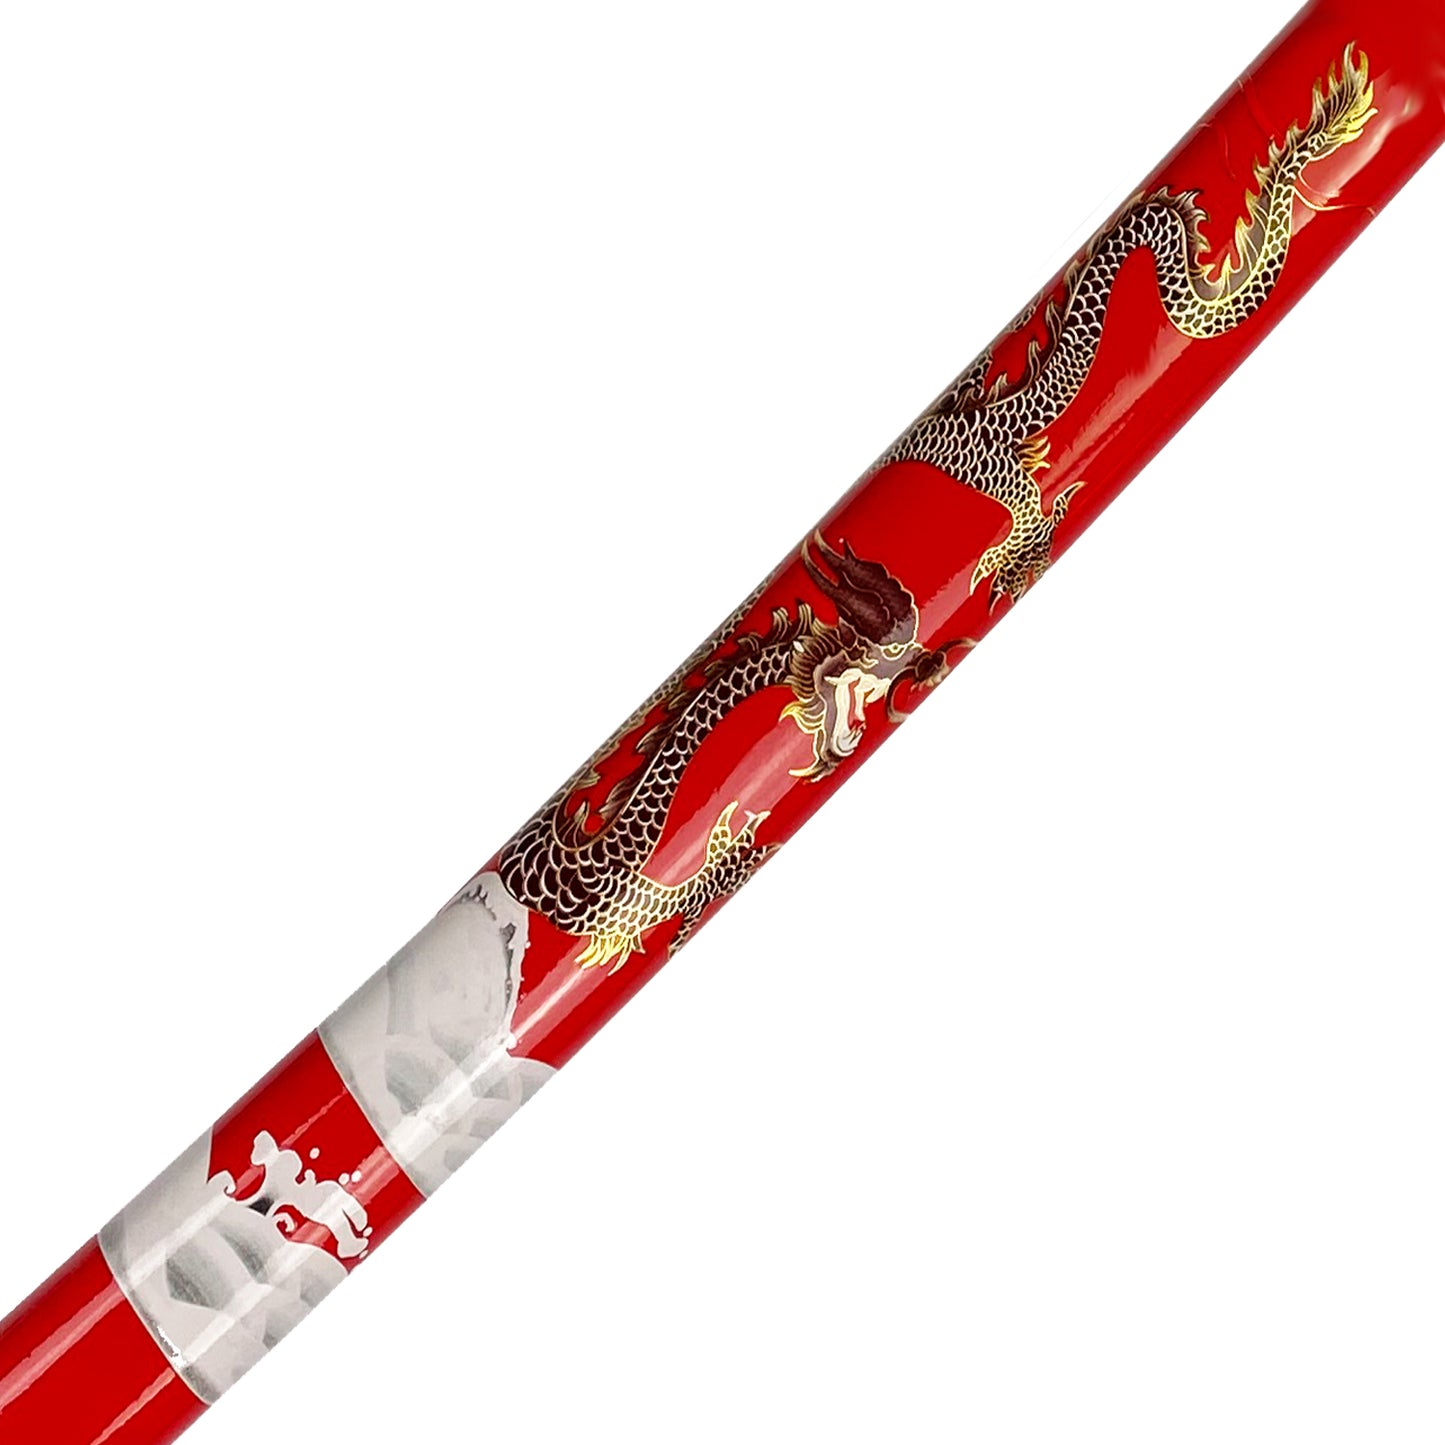 Bishamon 42 1/2" Samurai Sword with Dragon Imprint on Scabbard